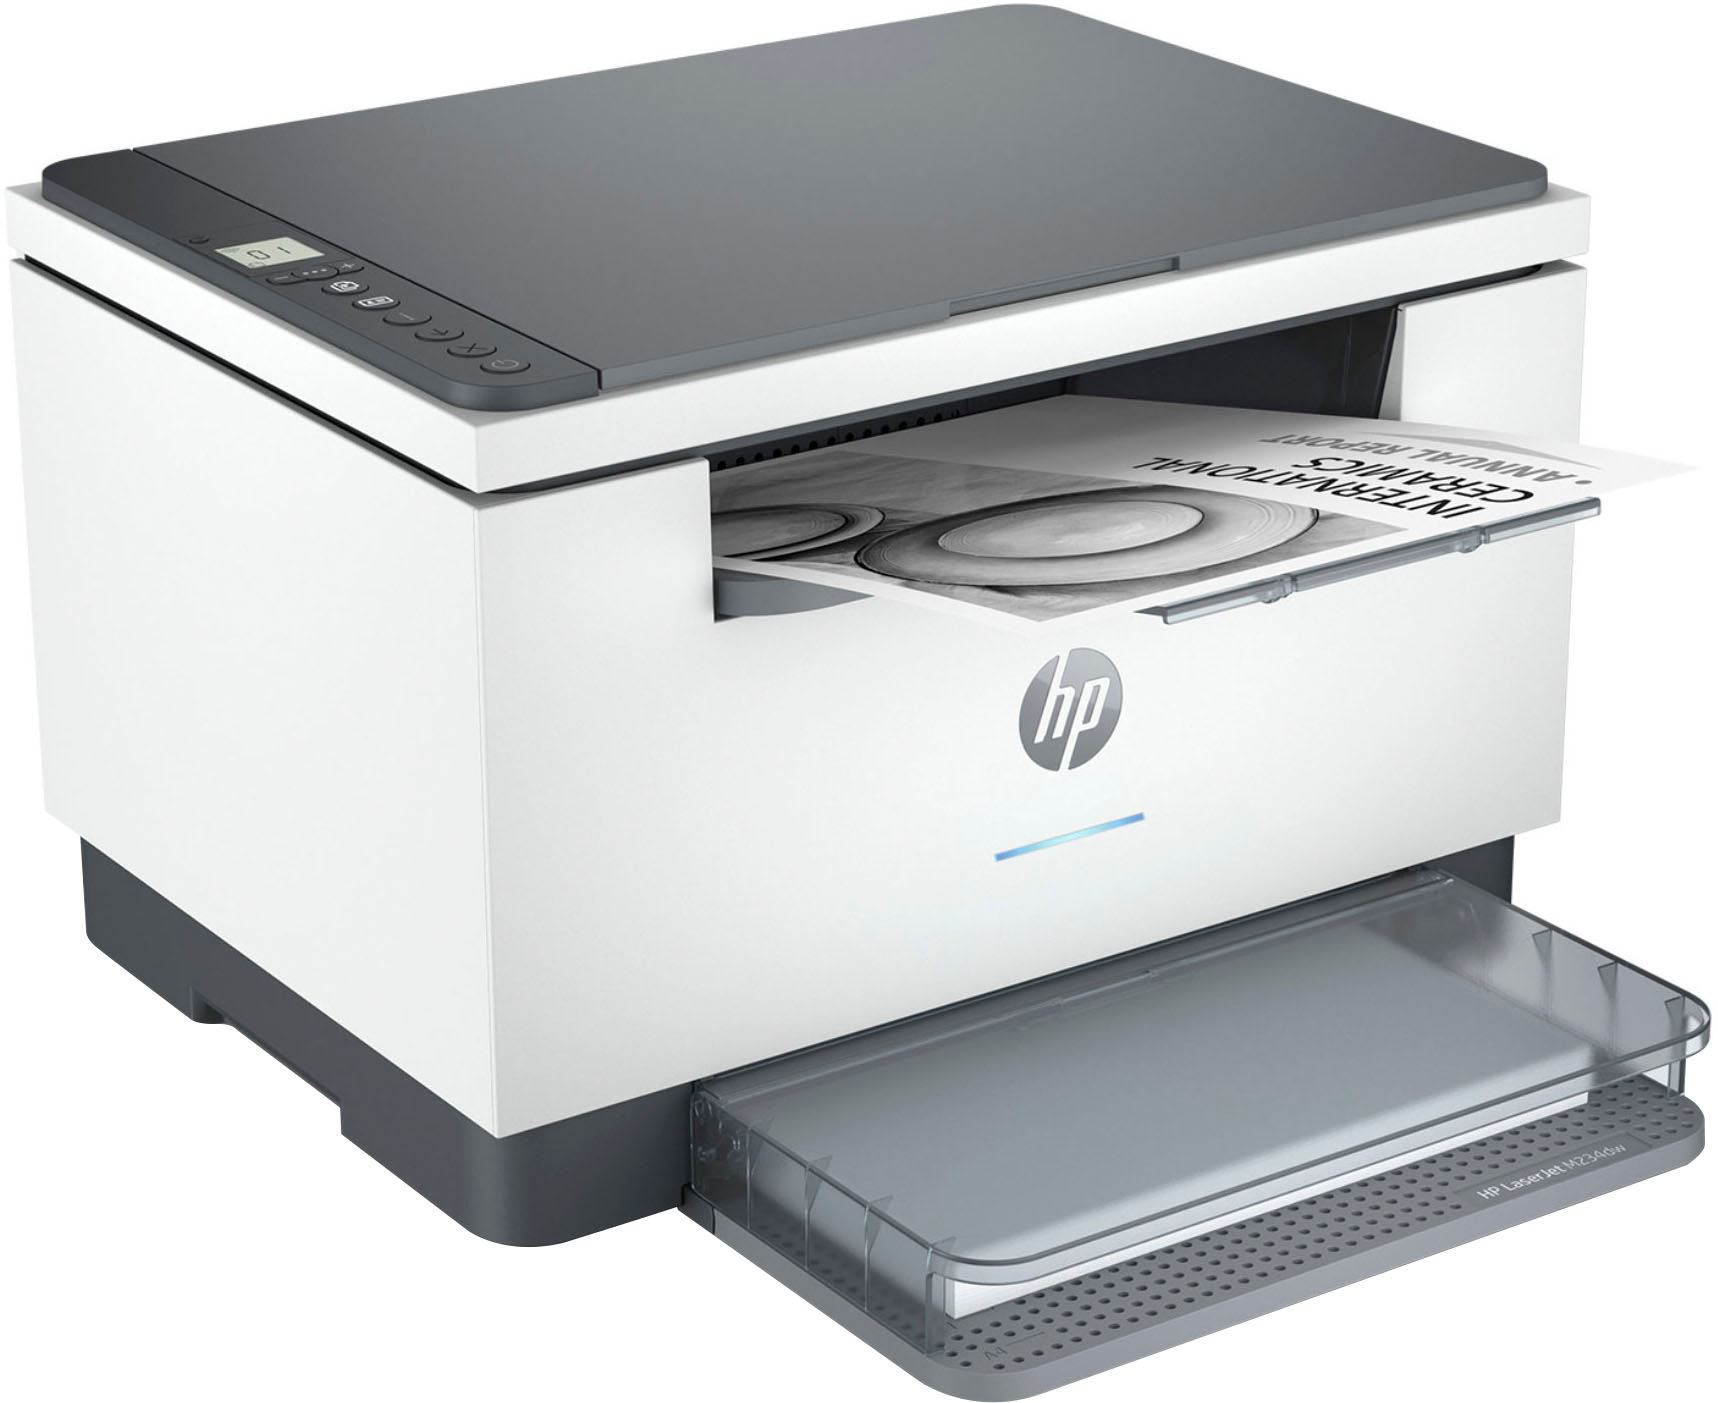 Angle View: HP - LaserJet M234dw Wireless Black-and-White Laser Printer - White & Slate